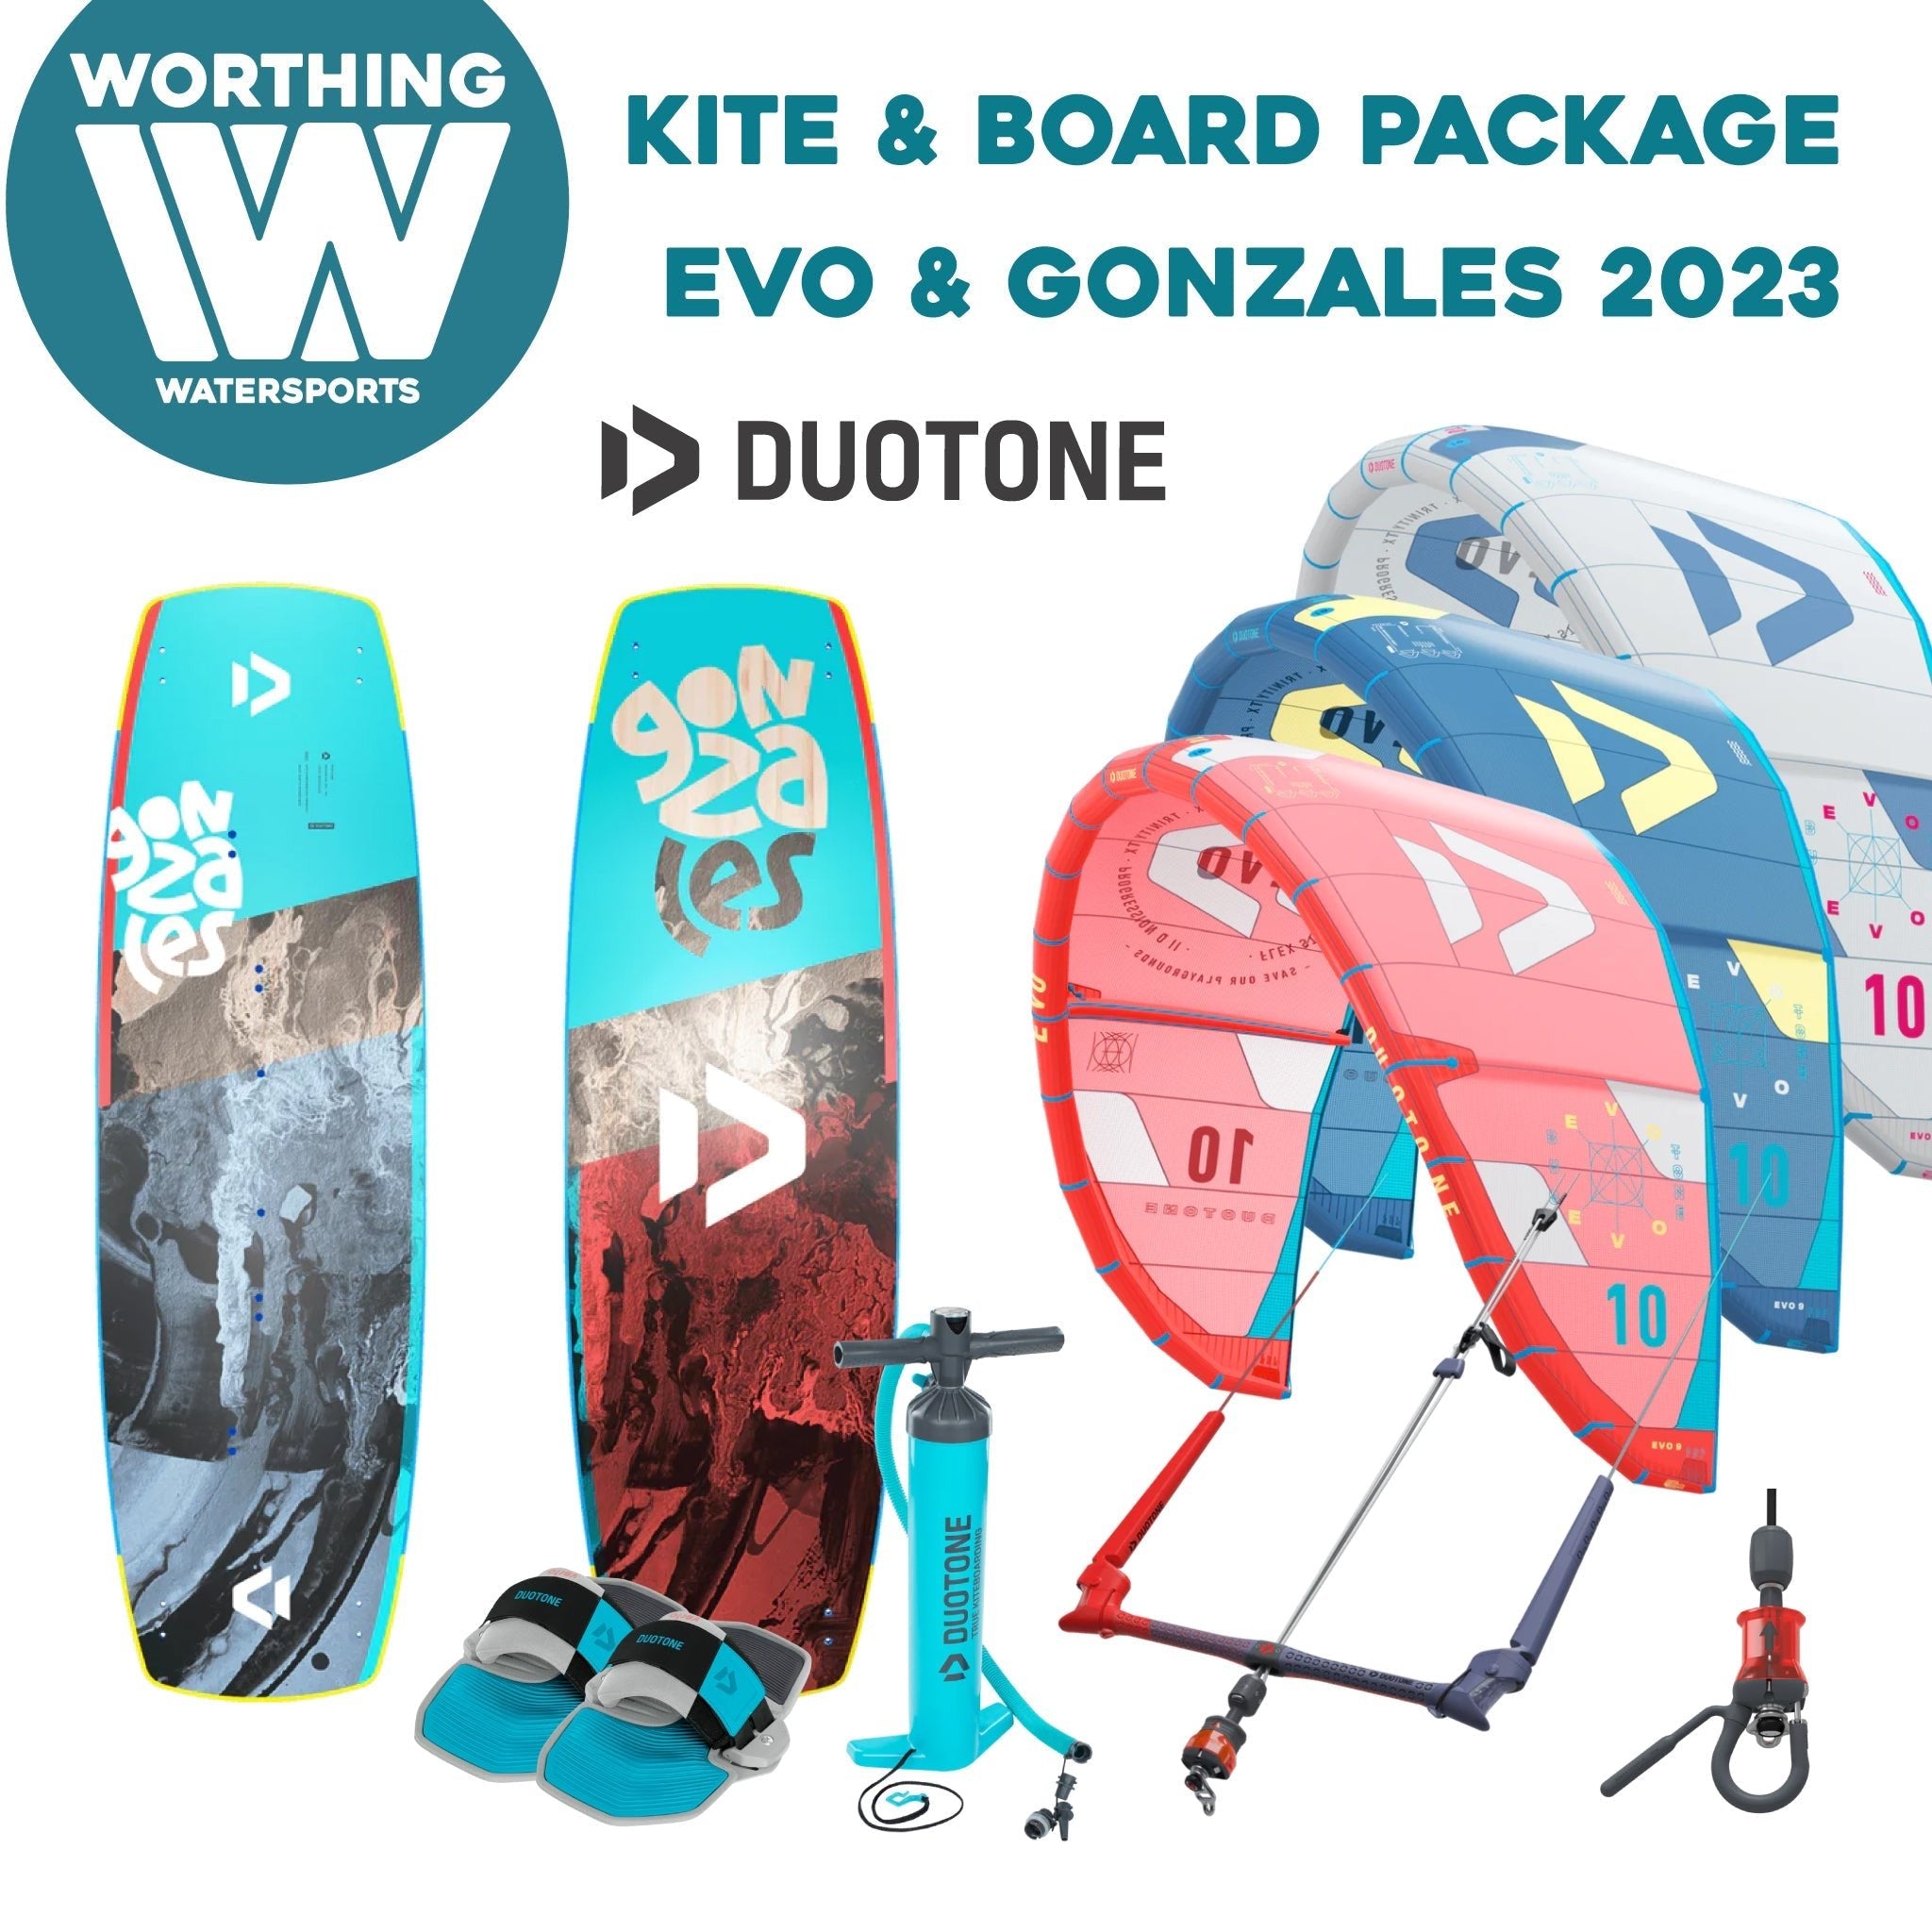 Duotone Evo Kite Gonzales Board Full Kitesurf Package 2023 - Worthing Watersports - Kites - Duotone Kiteboarding